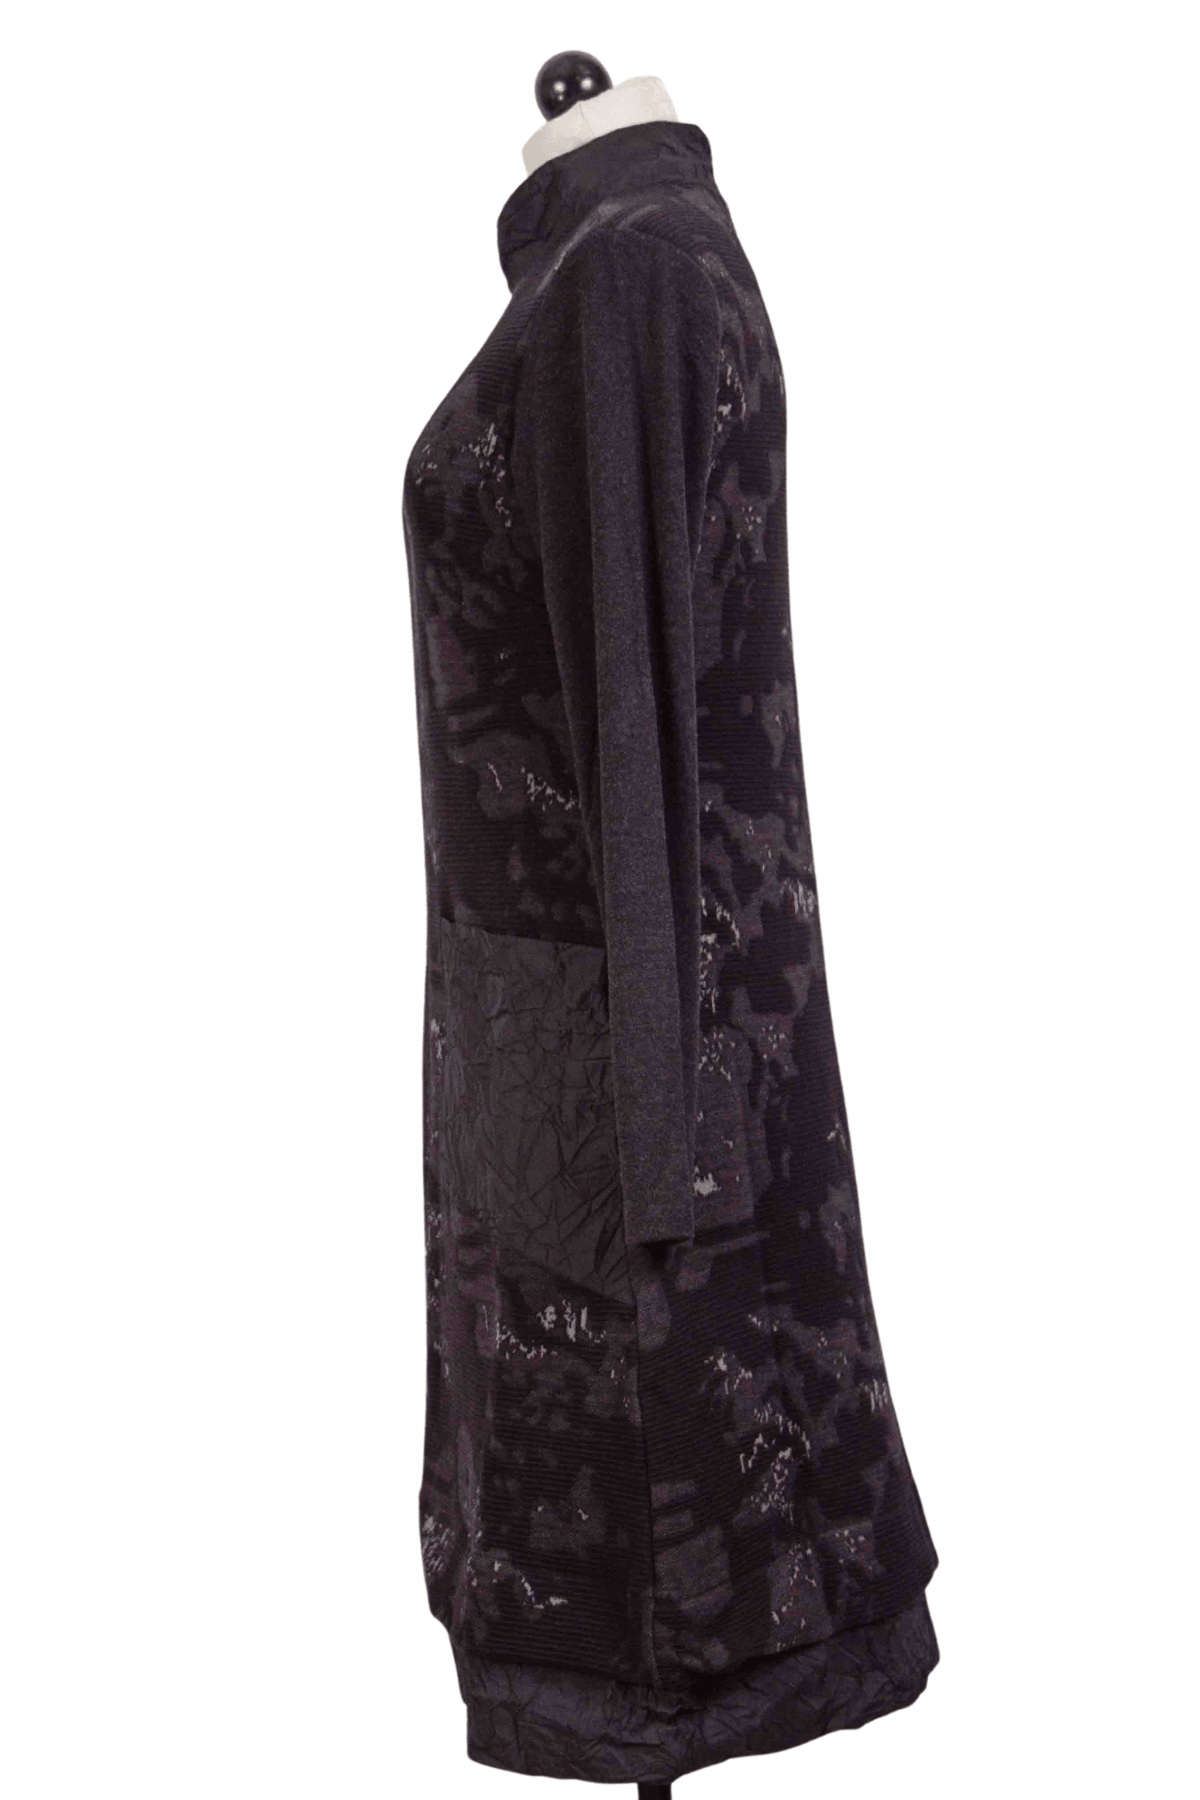 side view of Long Sleeve Mod Dress by Isle by Melis Kozan in Volcano